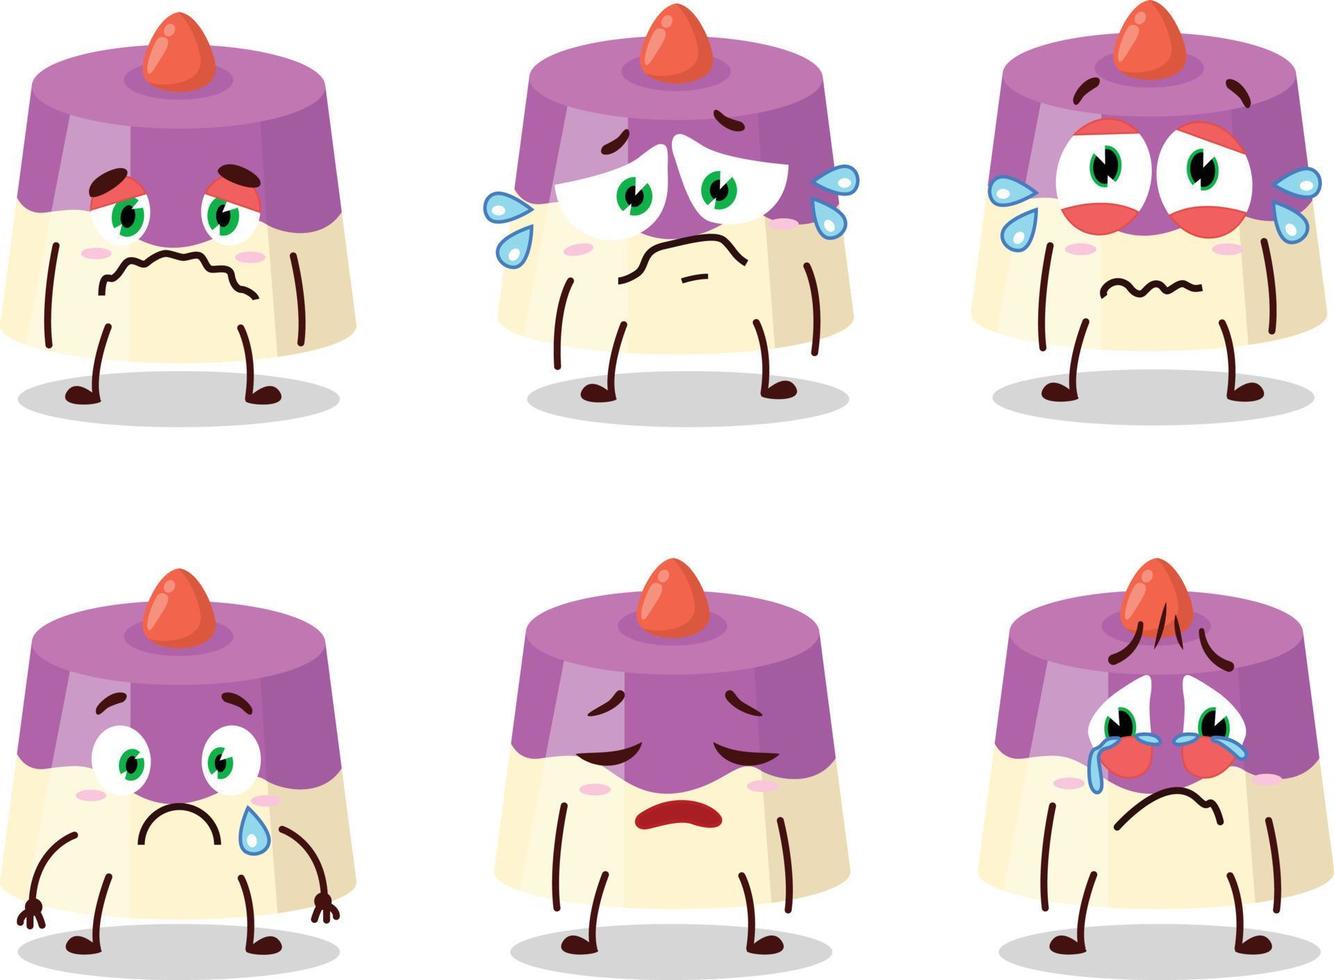 kaka tecknad serie i karaktär med ledsen uttryck vektor